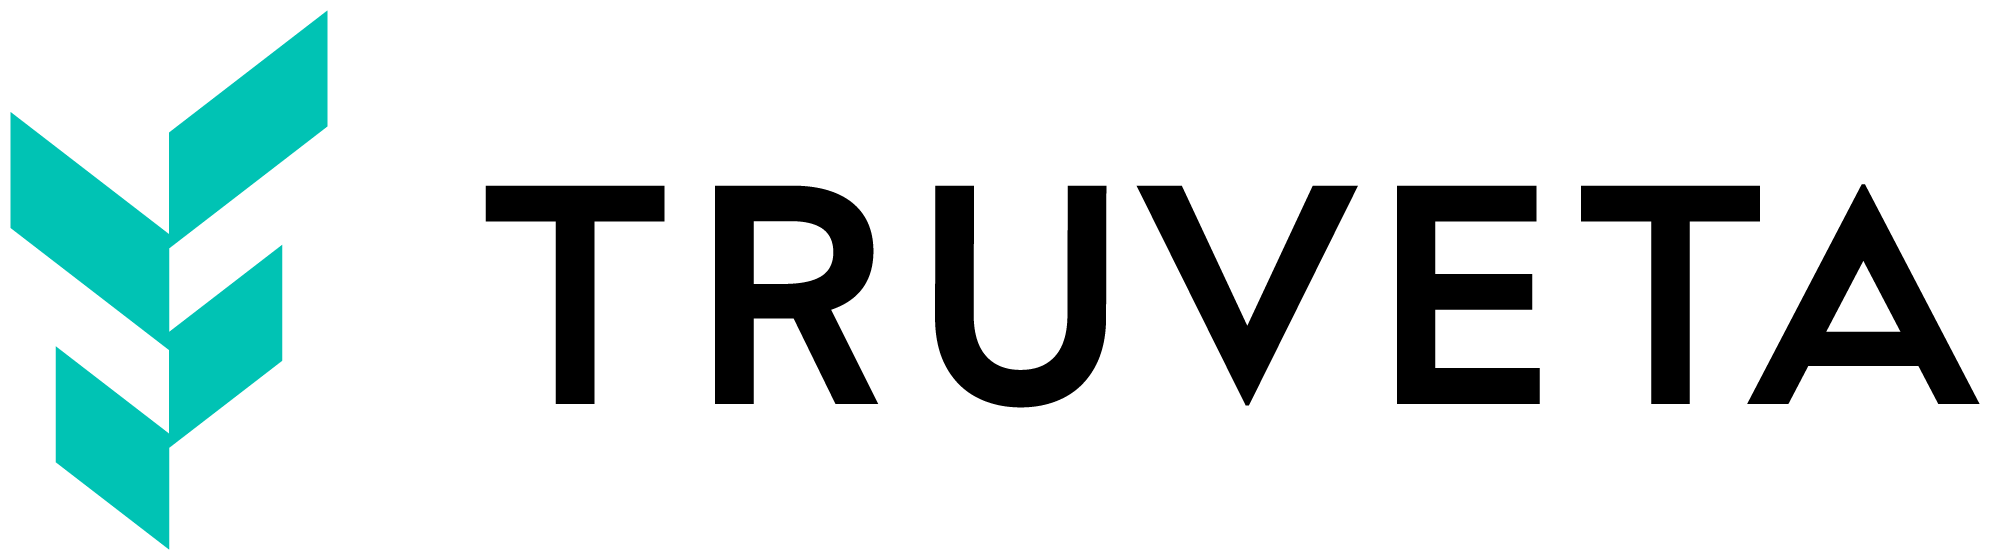 Truveta_Logo_Horizontal_RGB